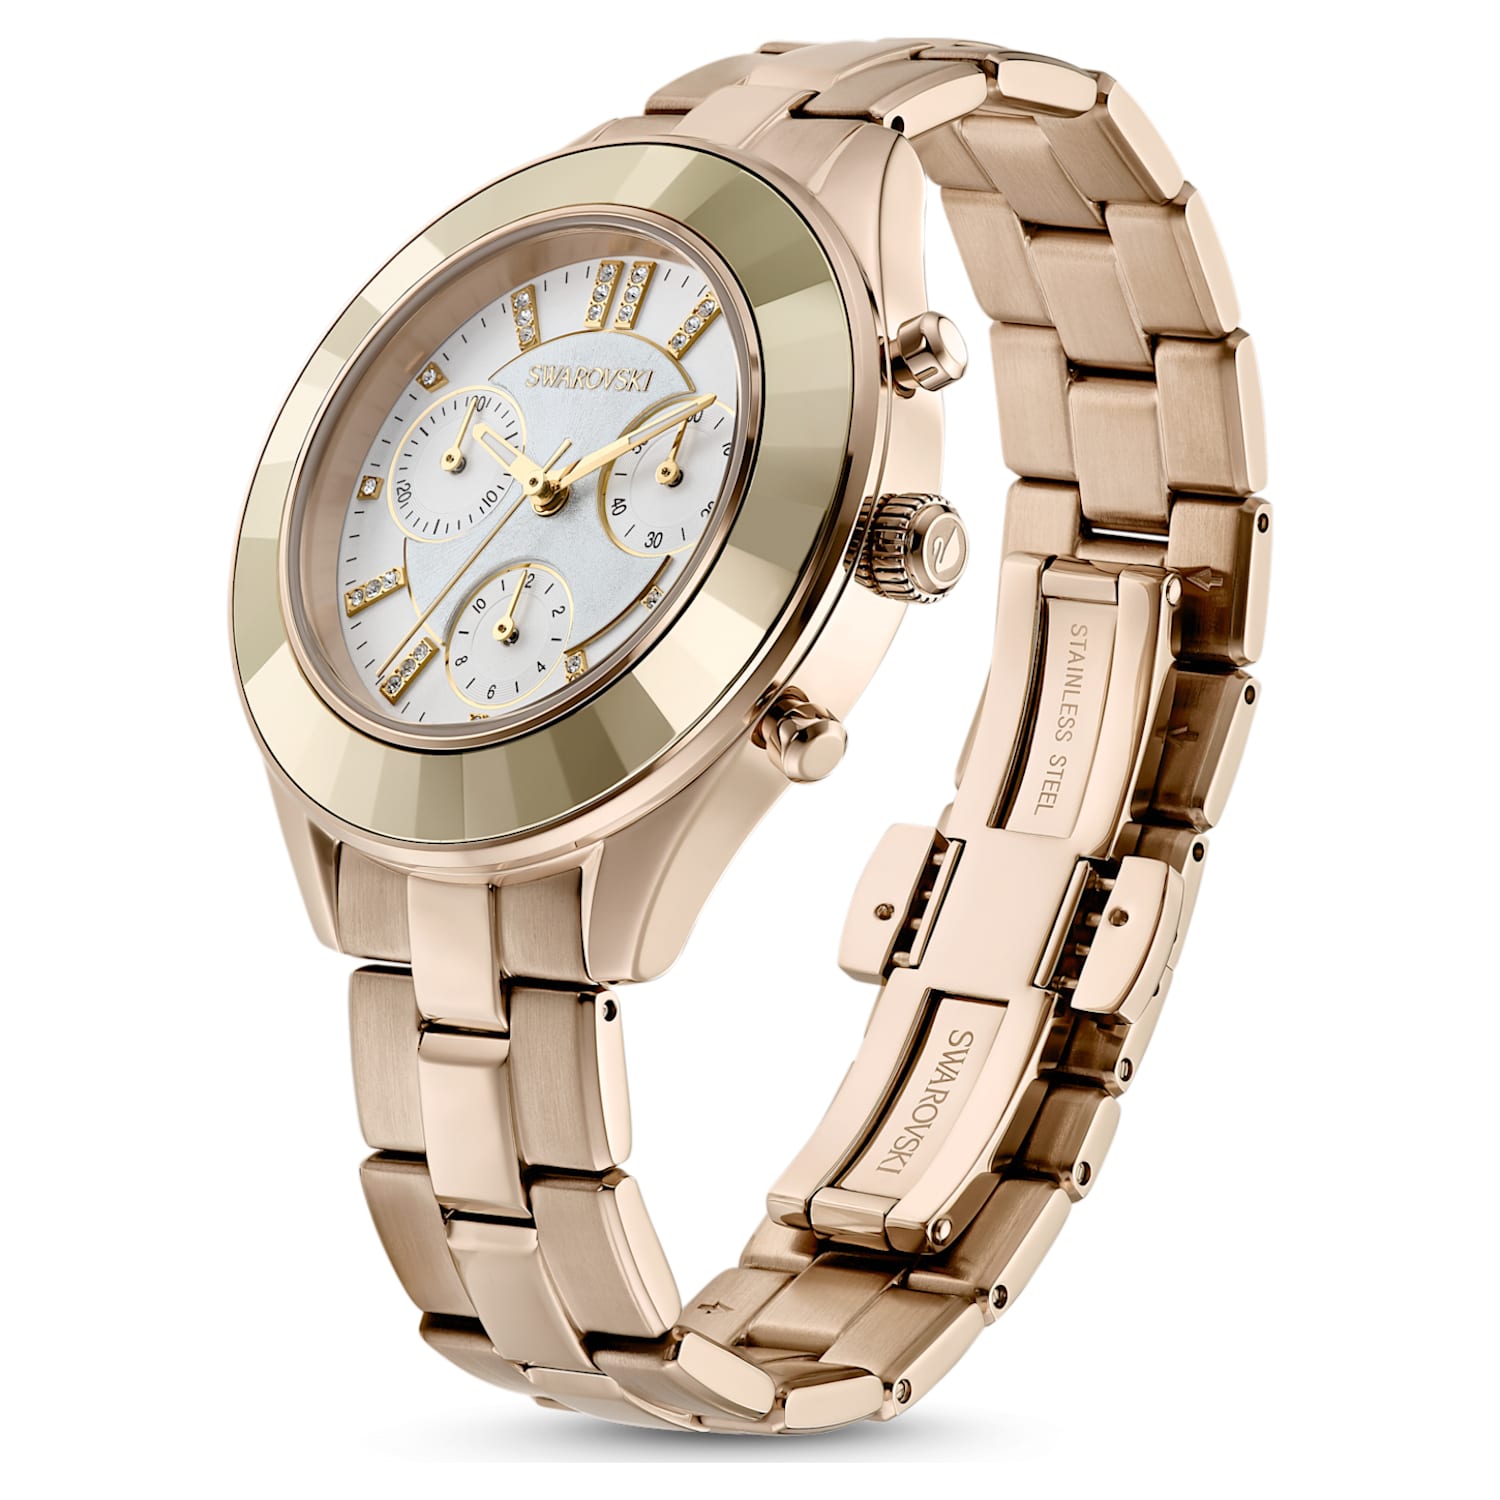 Octea Lux Sport watch, Metal bracelet, White, Champagne gold-tone finish